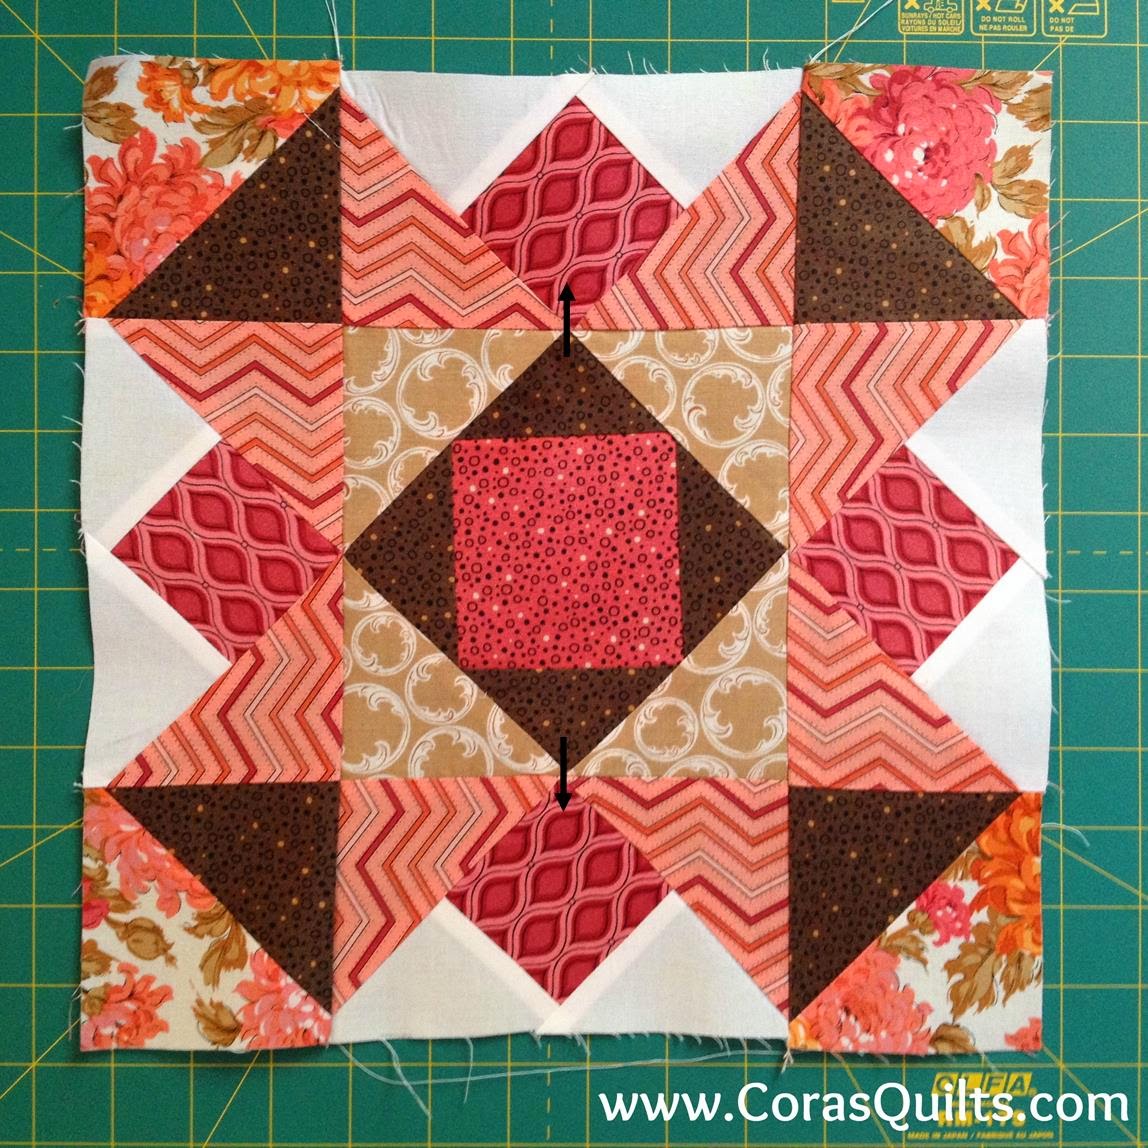 Cora's Quilts: Spring Sampler Block 7 - Friendship Quilt